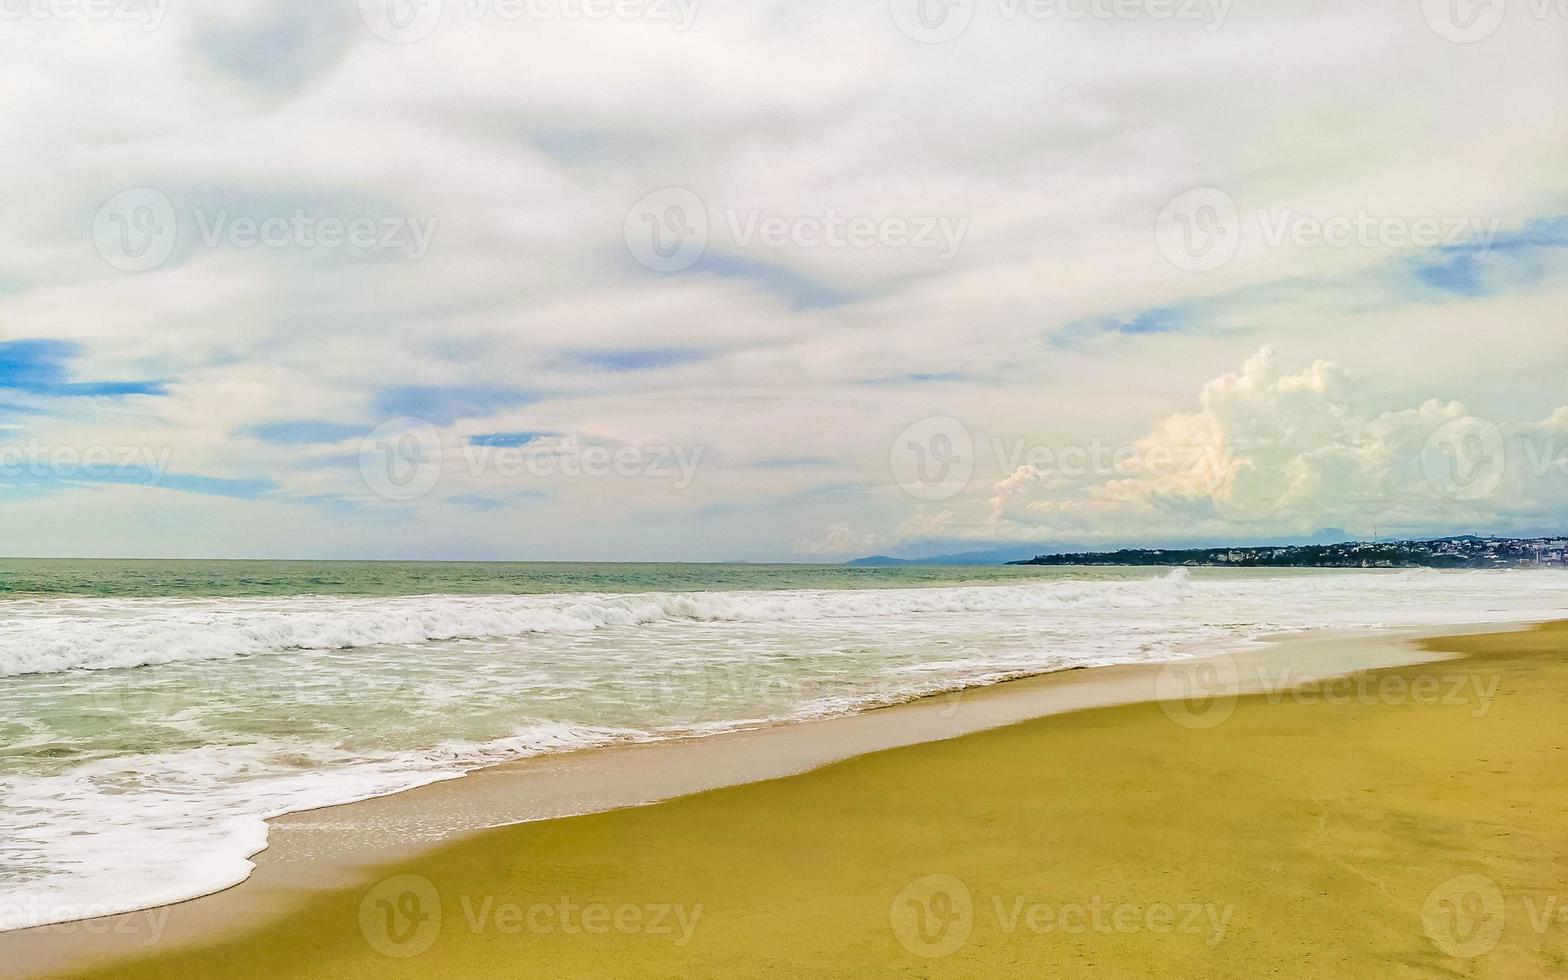 spiaggia con bellissimo enorme grande surfer onde puerto escondido Messico. foto